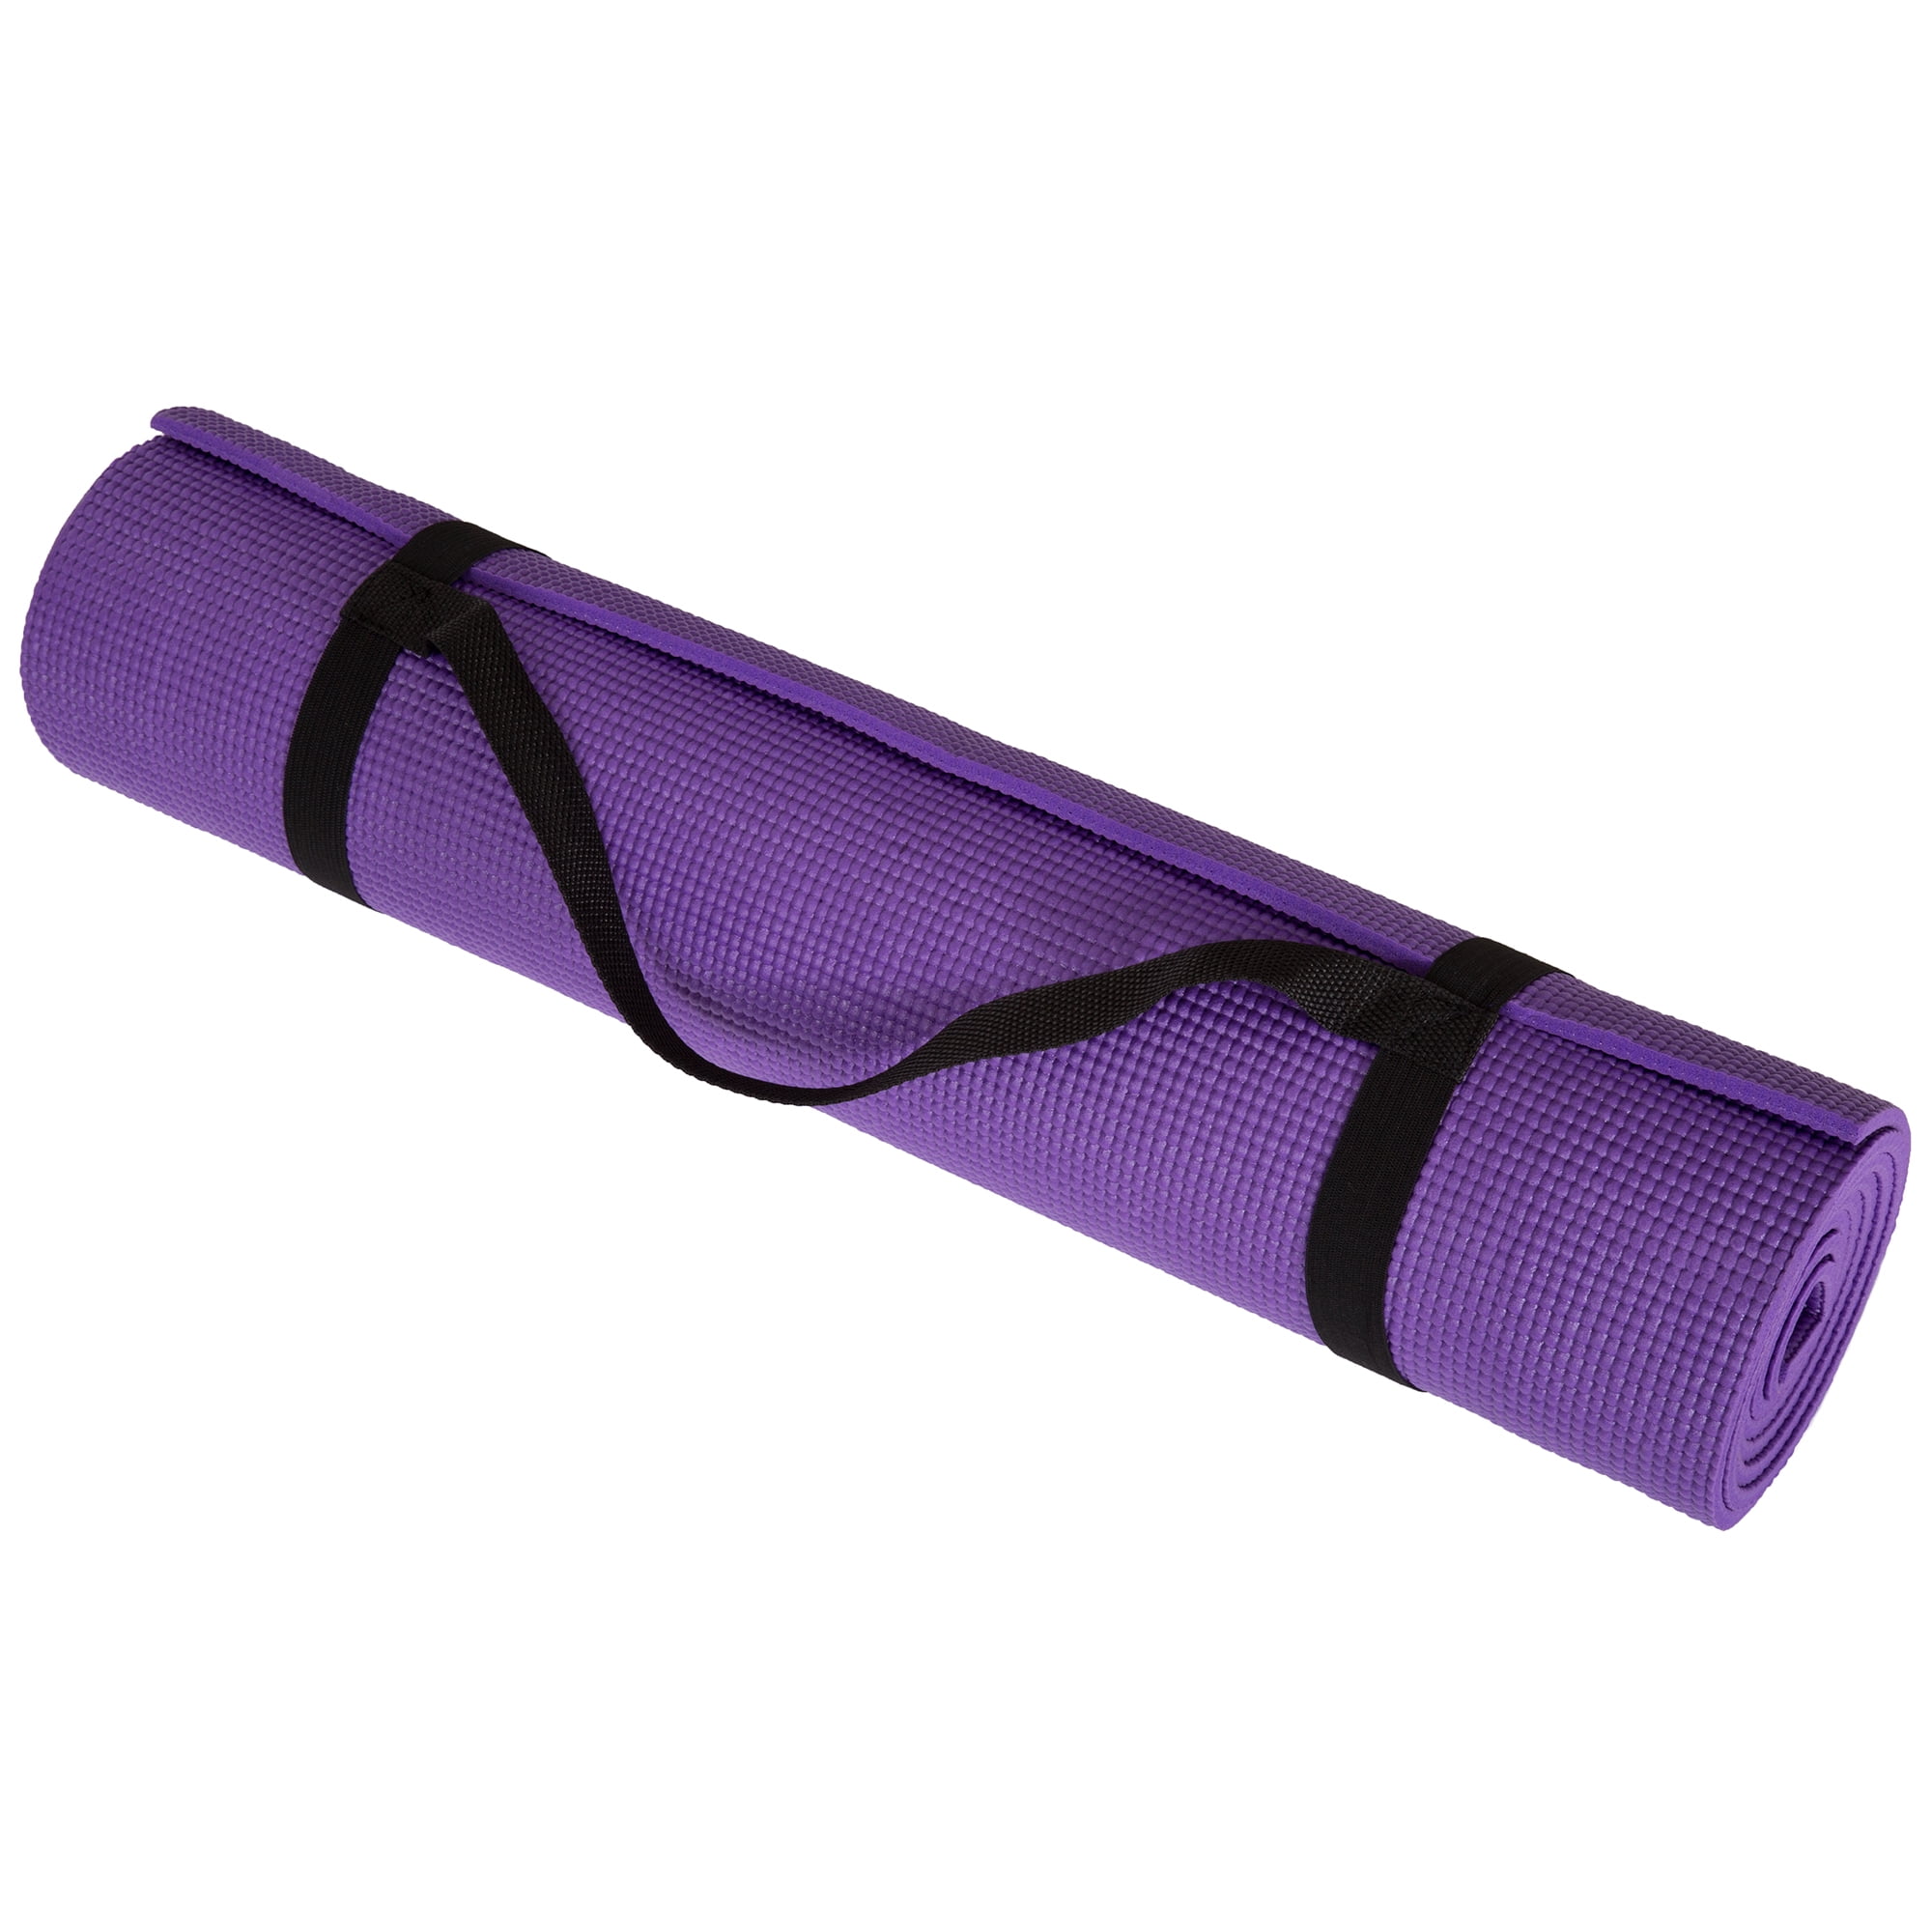 Evolve by GAIAM Purple Reversible Yoga Mat 5mm 68" X 23" FREE YOGA STRAP 